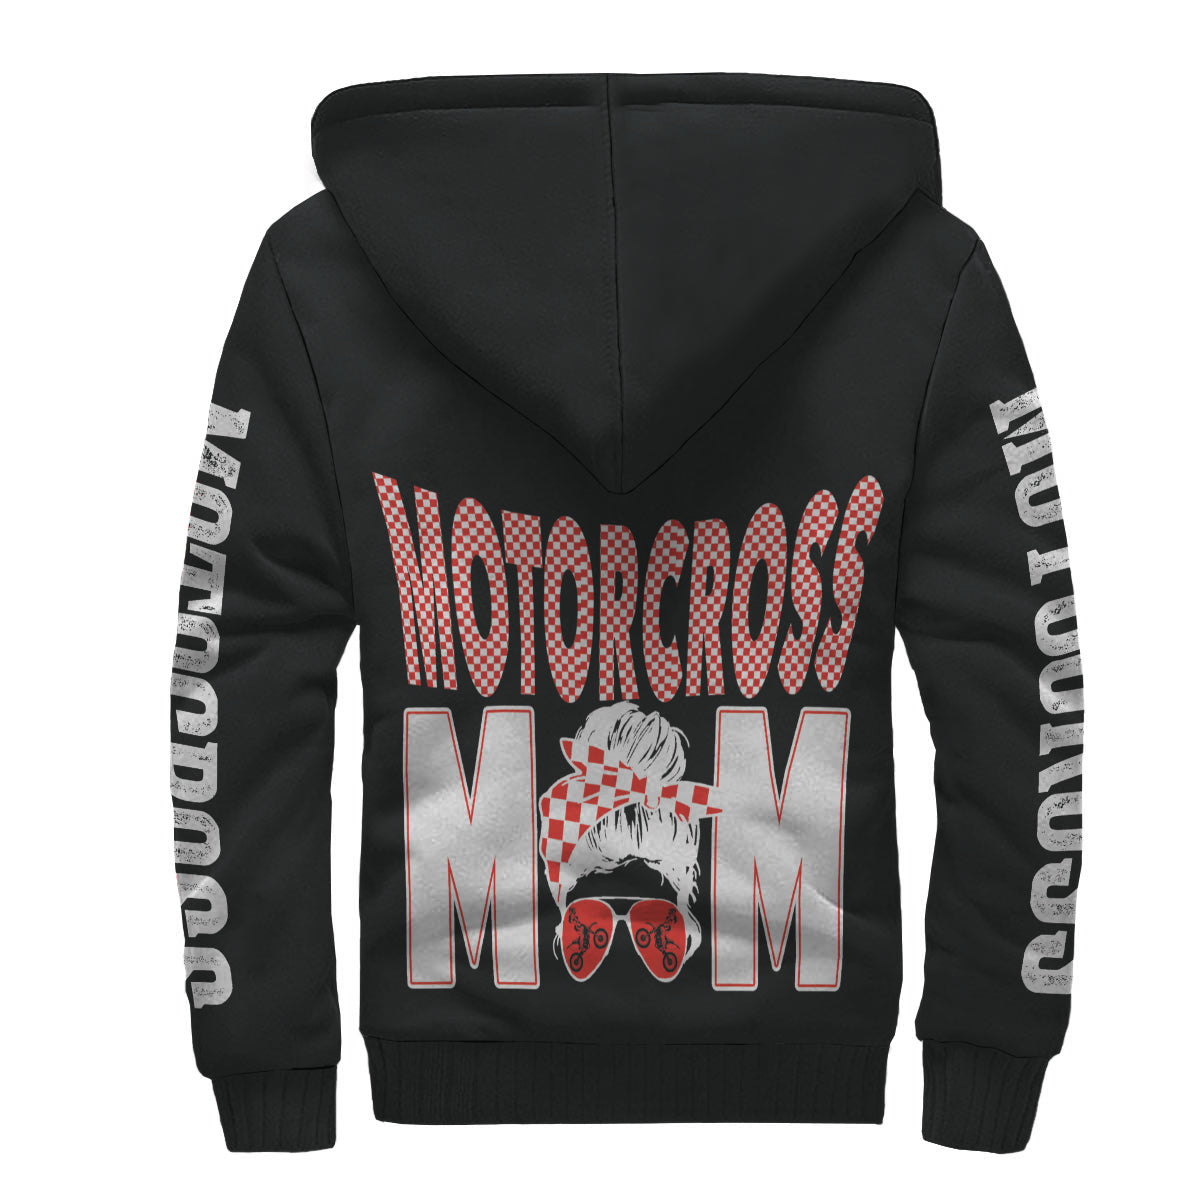 Motocross Mom Sherpa Jacket